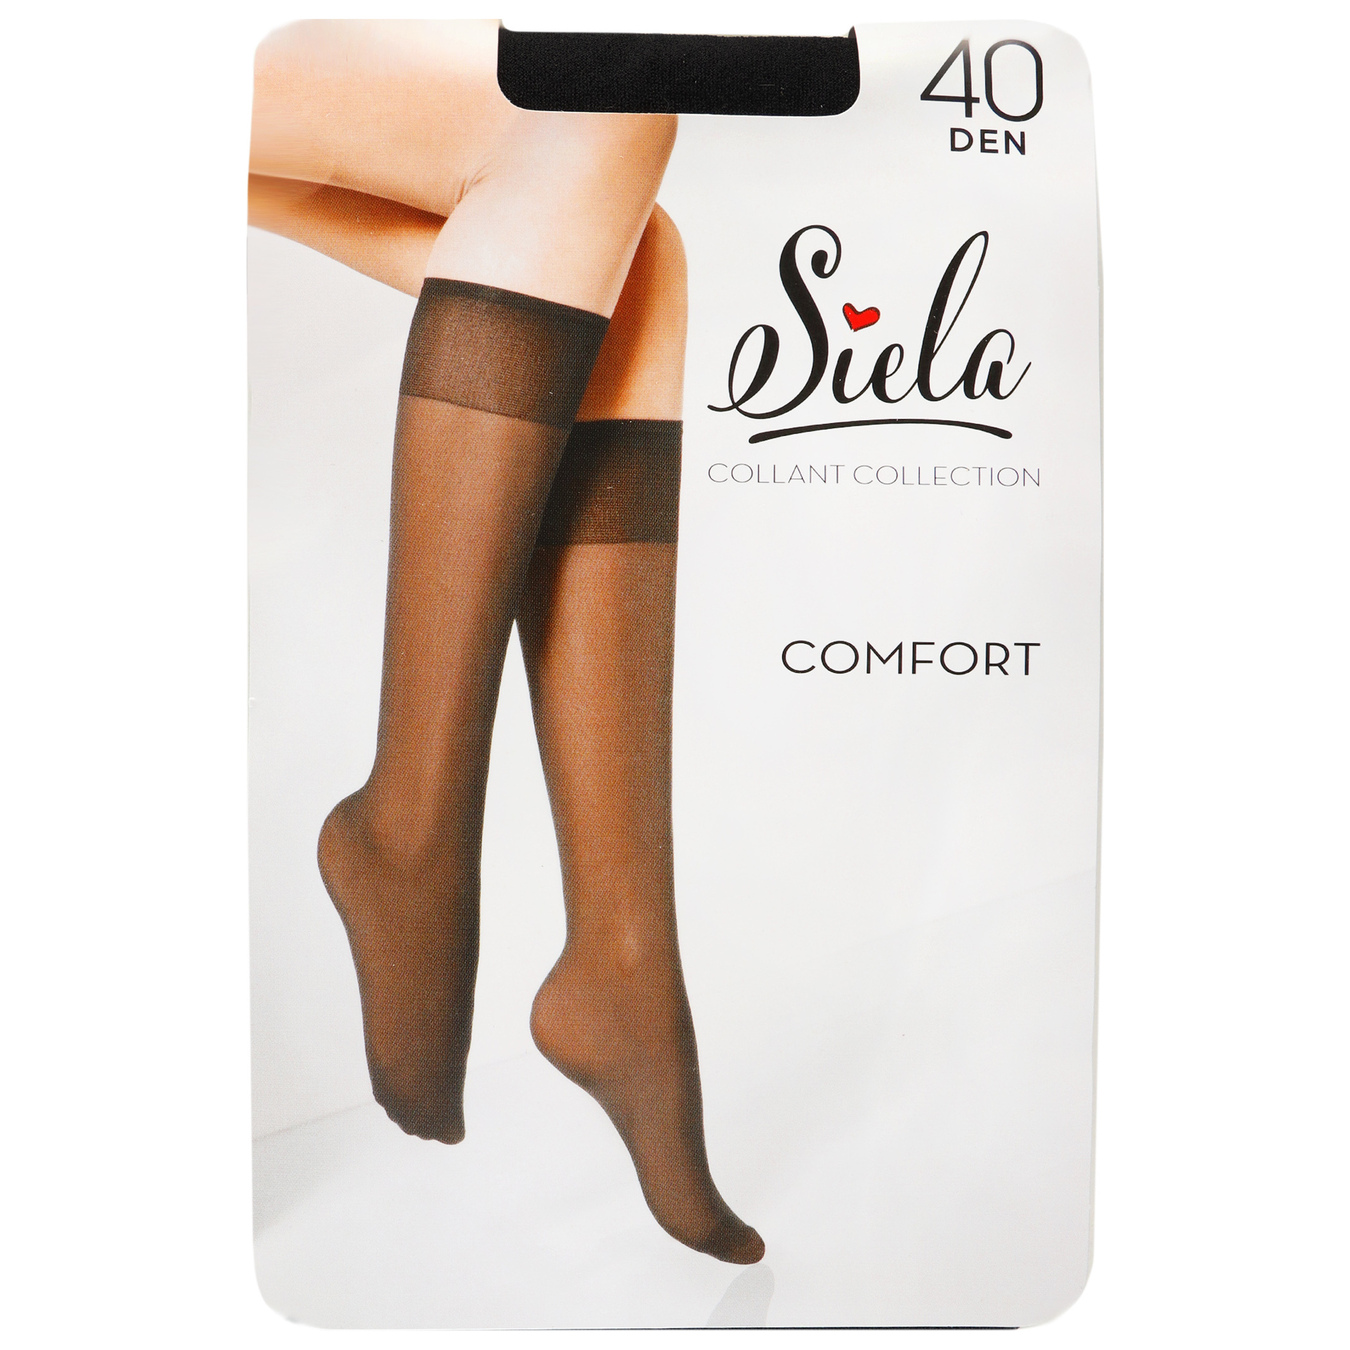 Women's golf shoes Siela Comfort 40den nero size 23